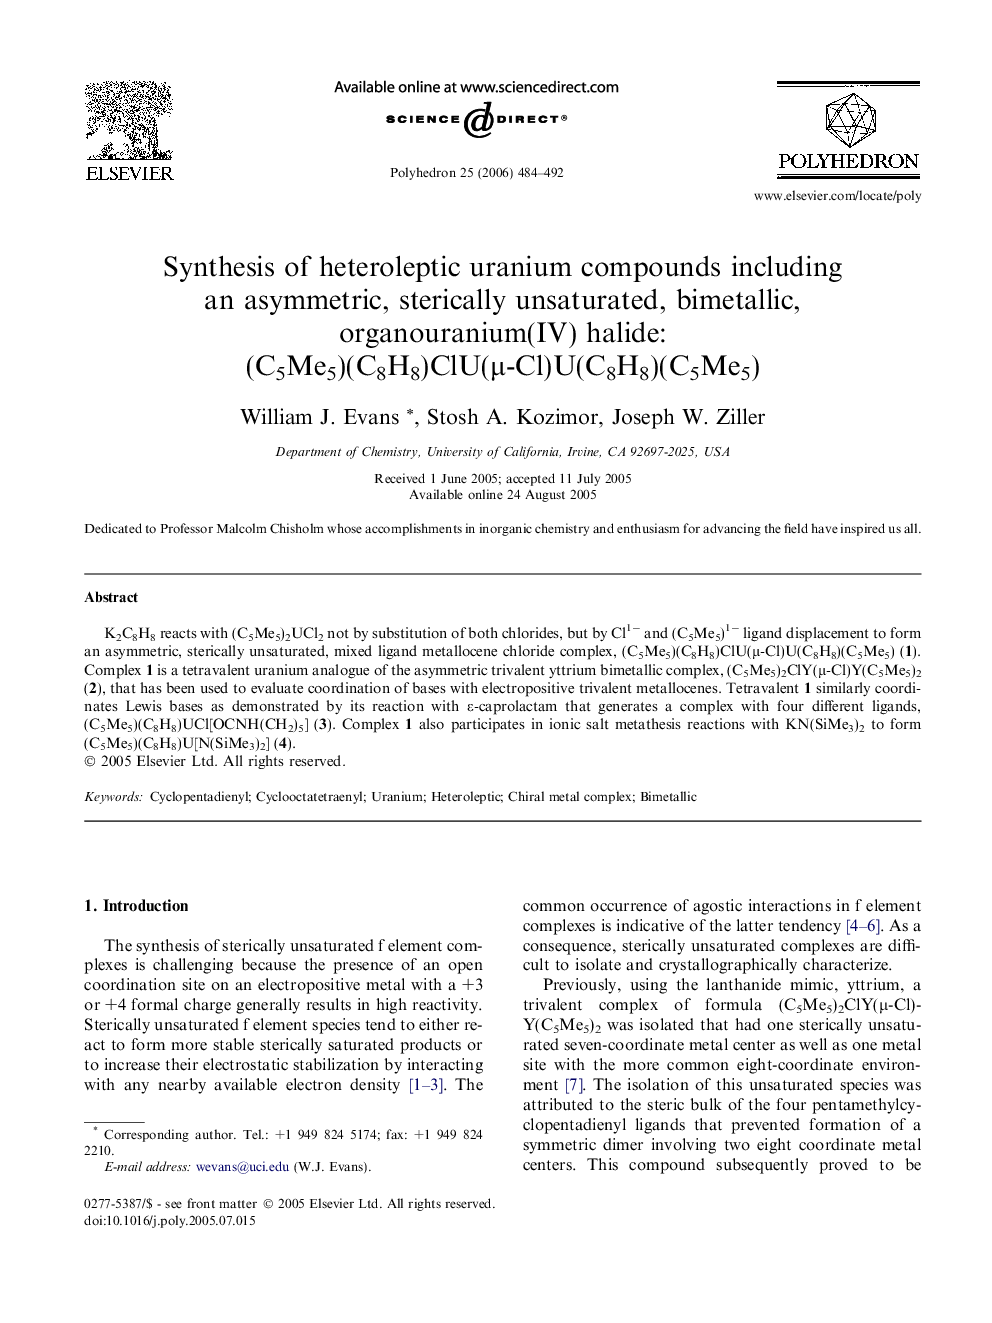 Synthesis of heteroleptic uranium compounds including an asymmetric, sterically unsaturated, bimetallic, organouranium(IV) halide: (C5Me5)(C8H8)ClU(μ-Cl)U(C8H8)(C5Me5)